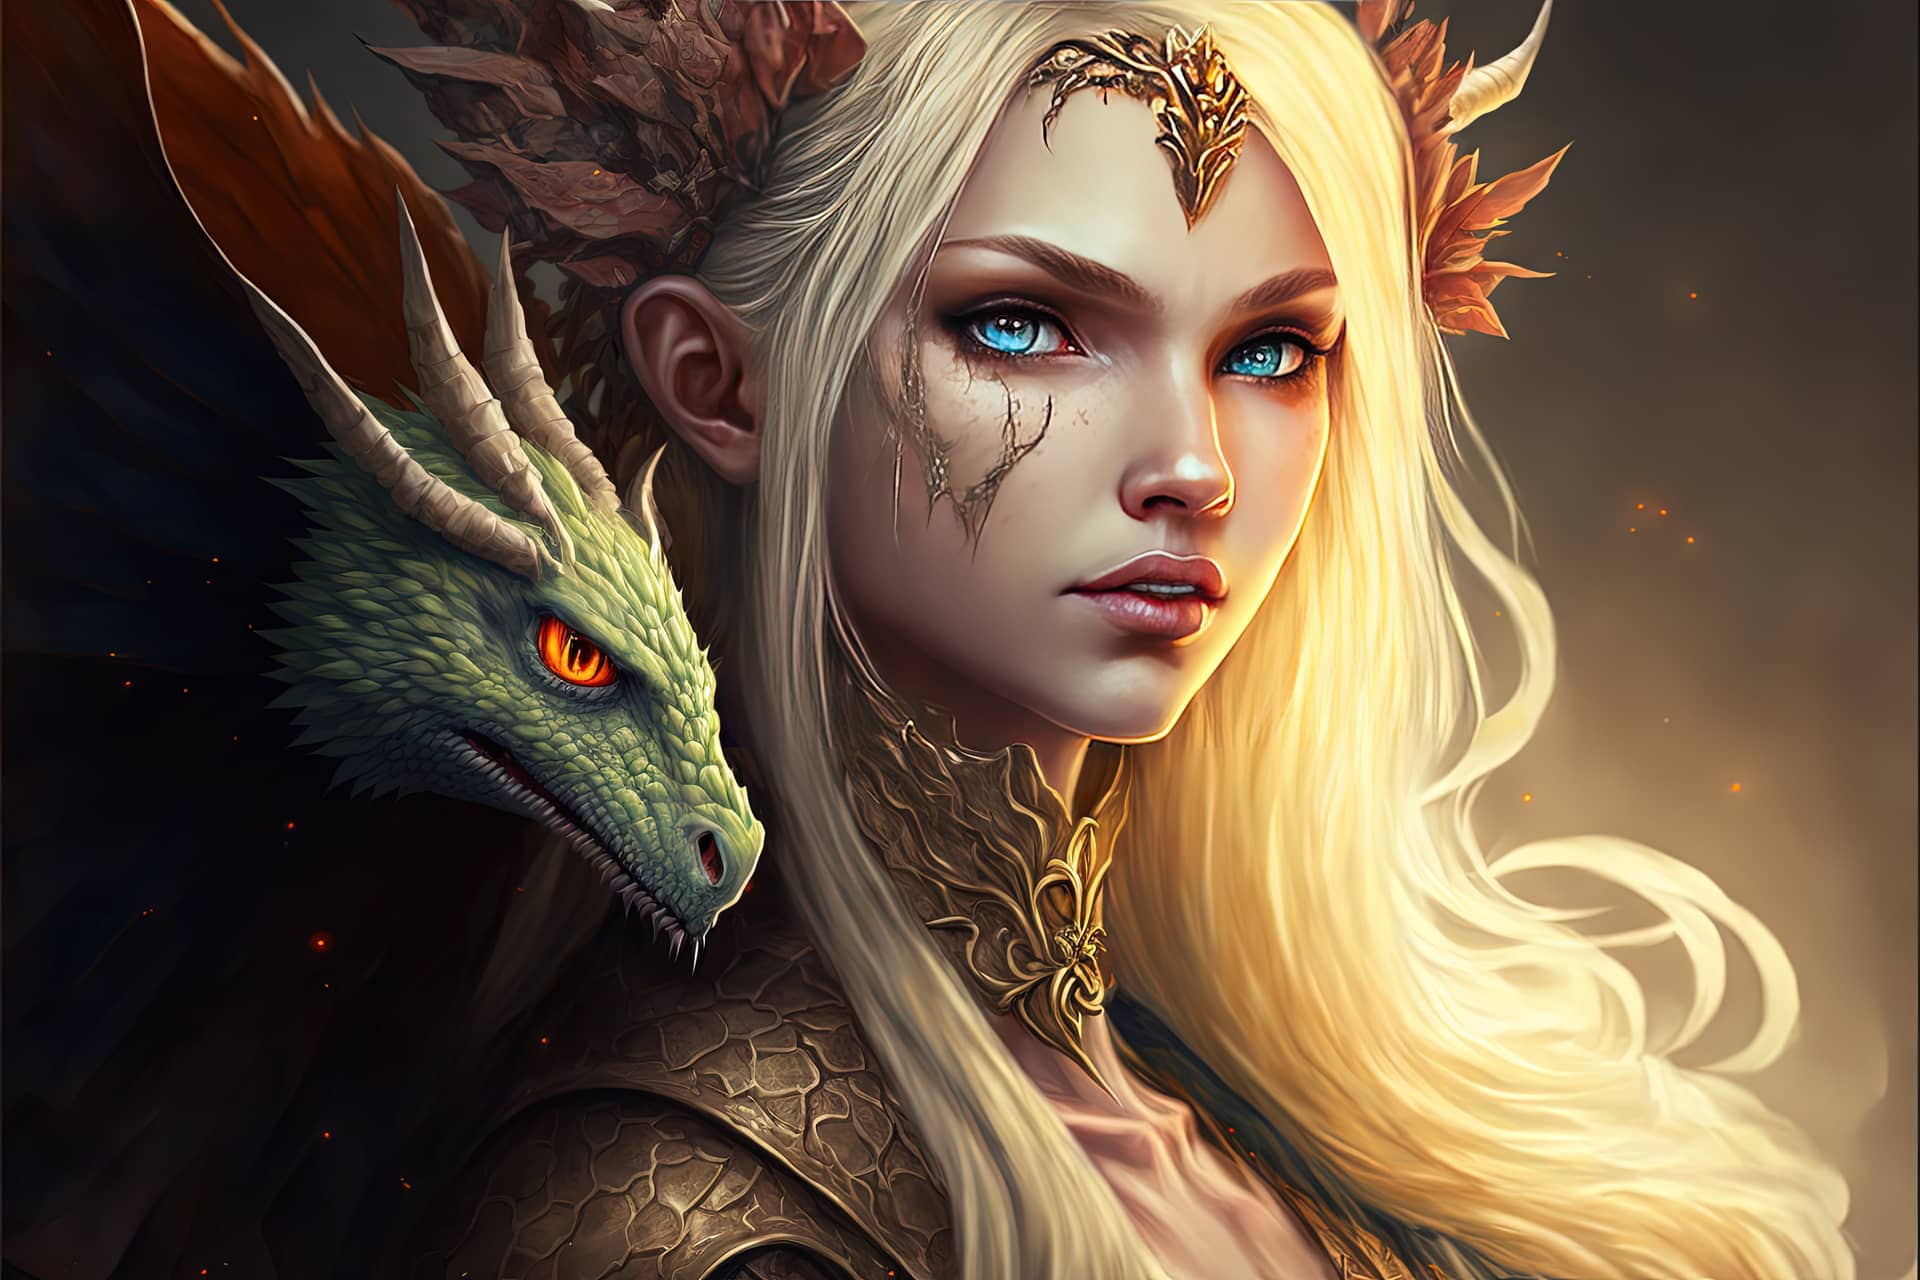 Dragon fantasy creature generative cool images for profile